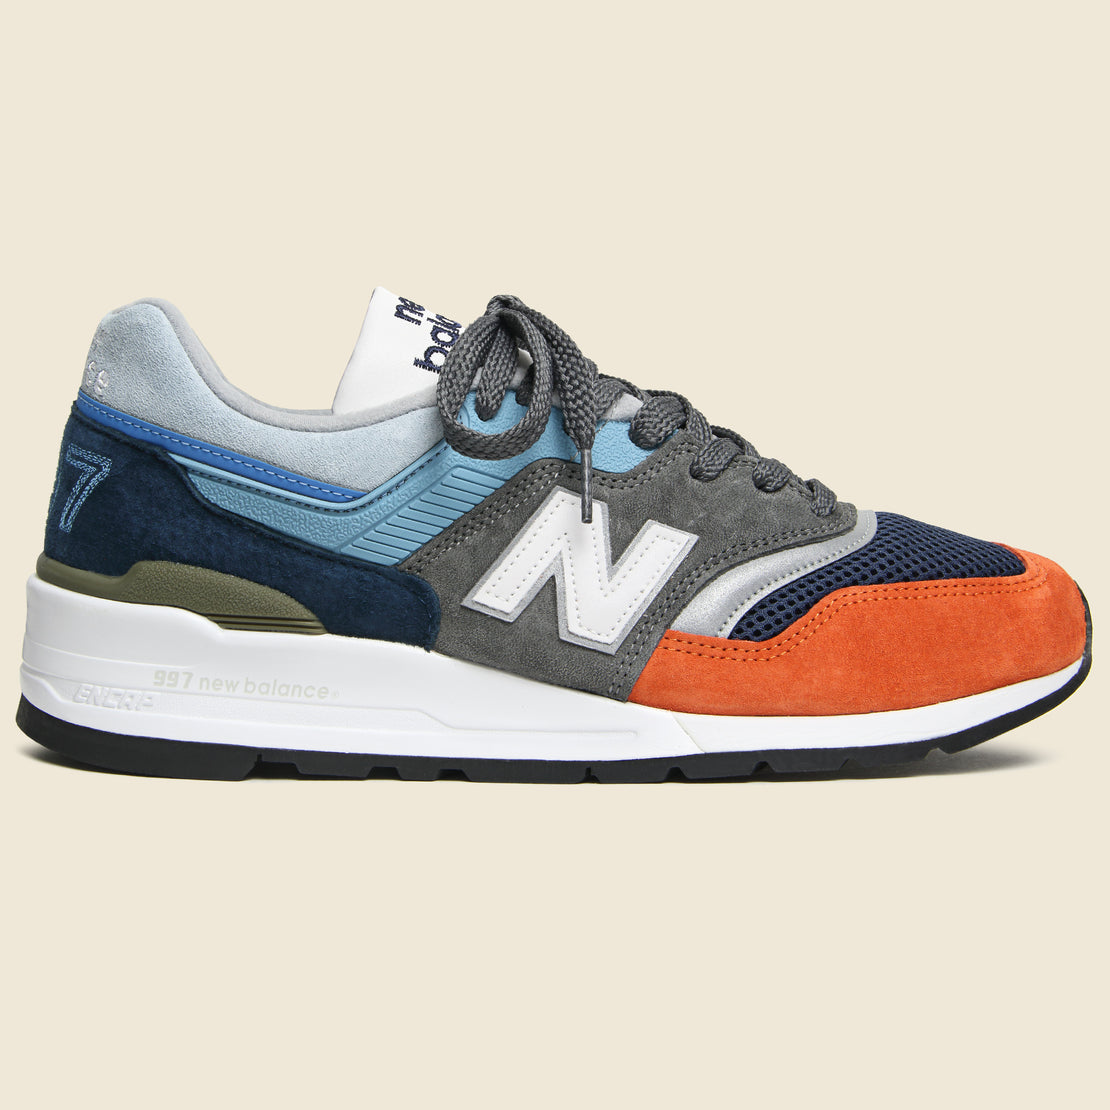 New Balance 997 Sneaker - Blue/Grey